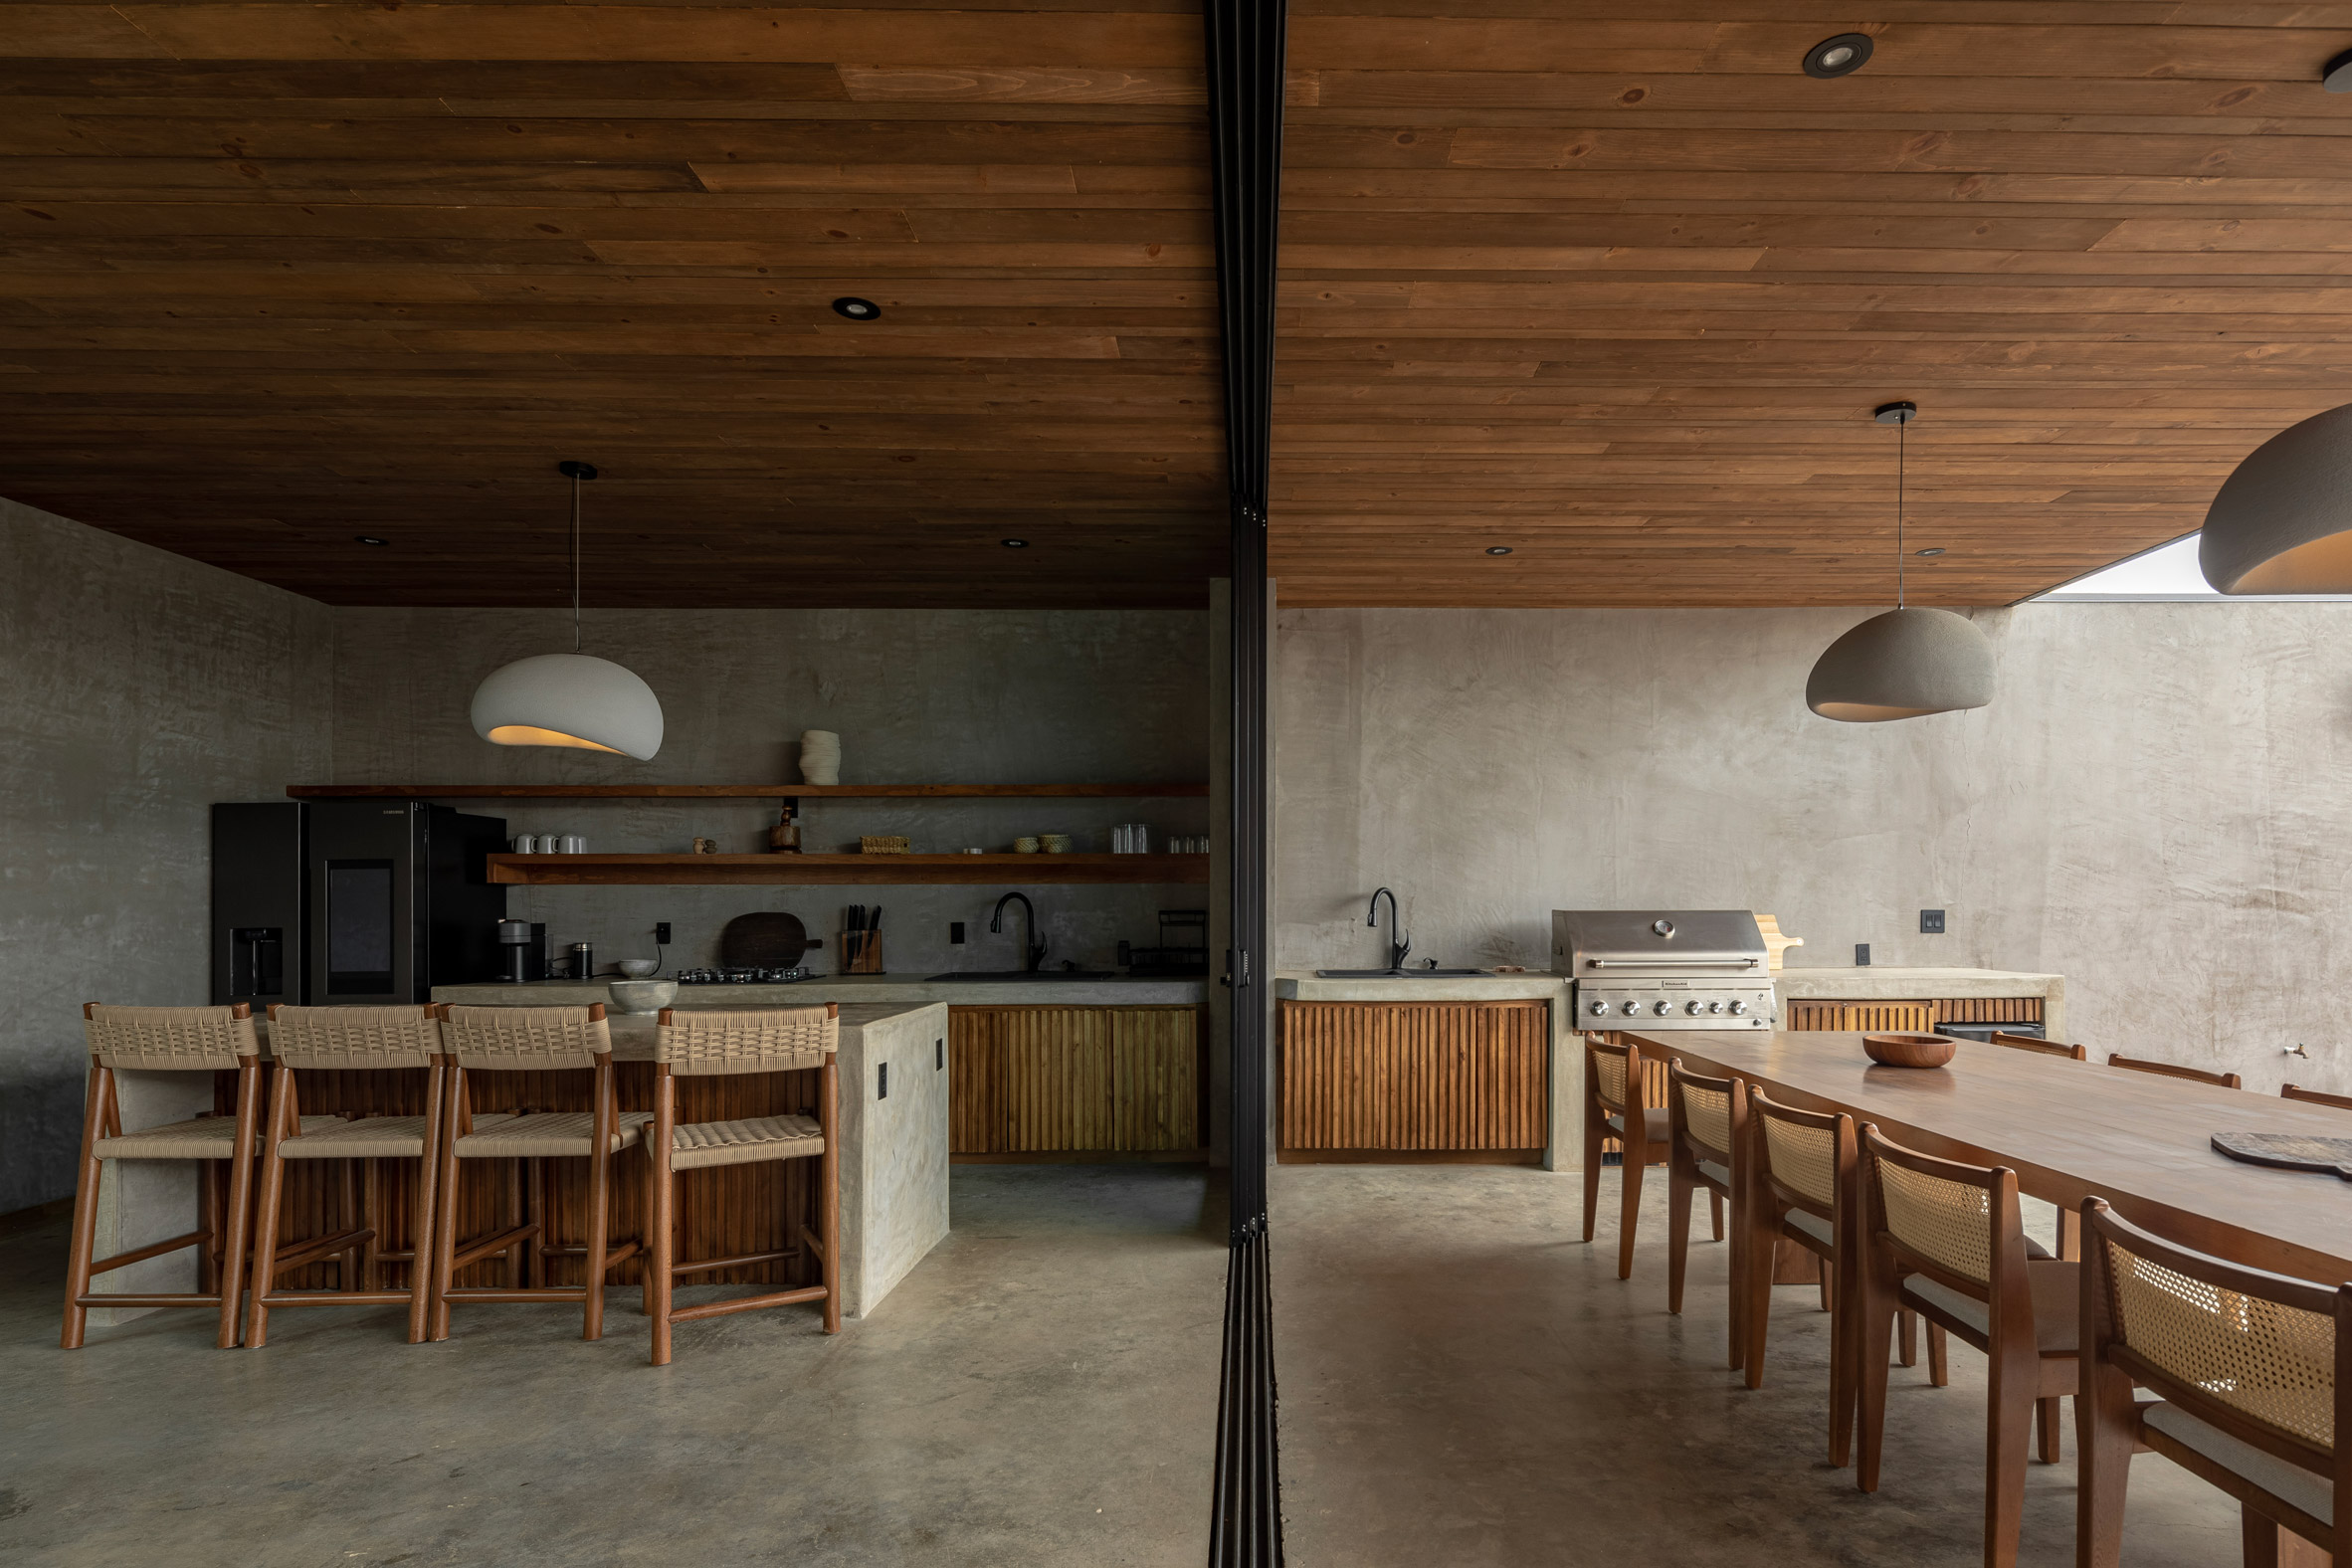 Concrete and wooden interior